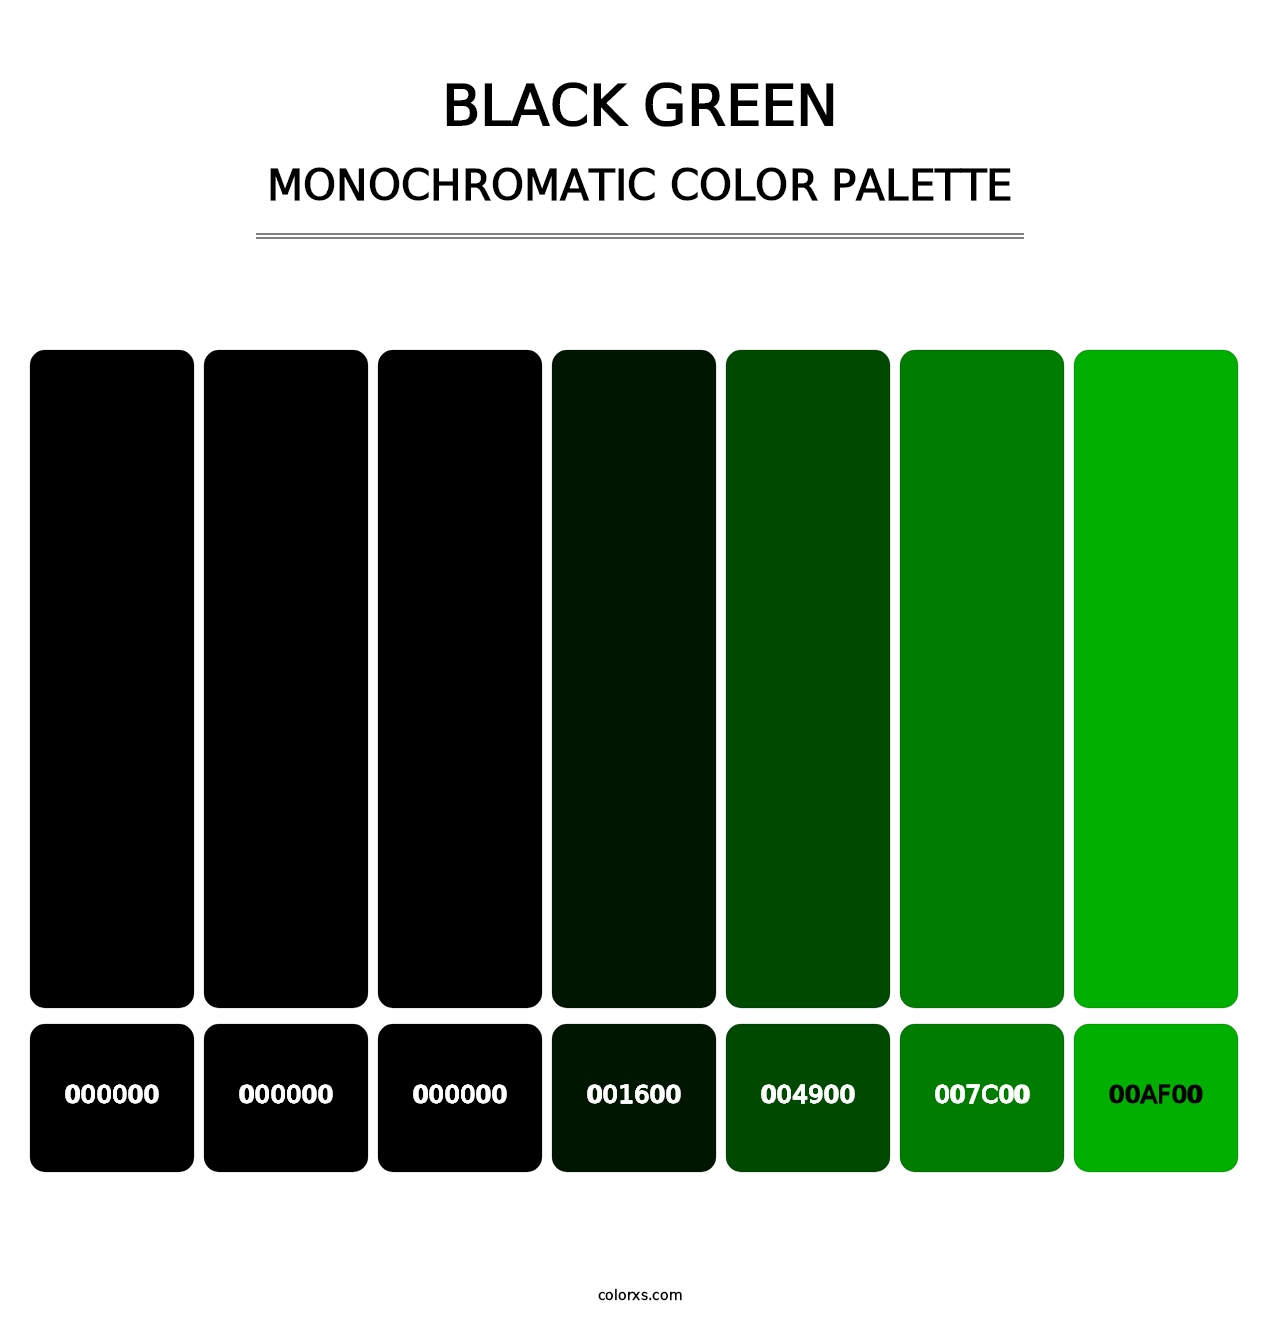 Black Green - Monochromatic Color Palette